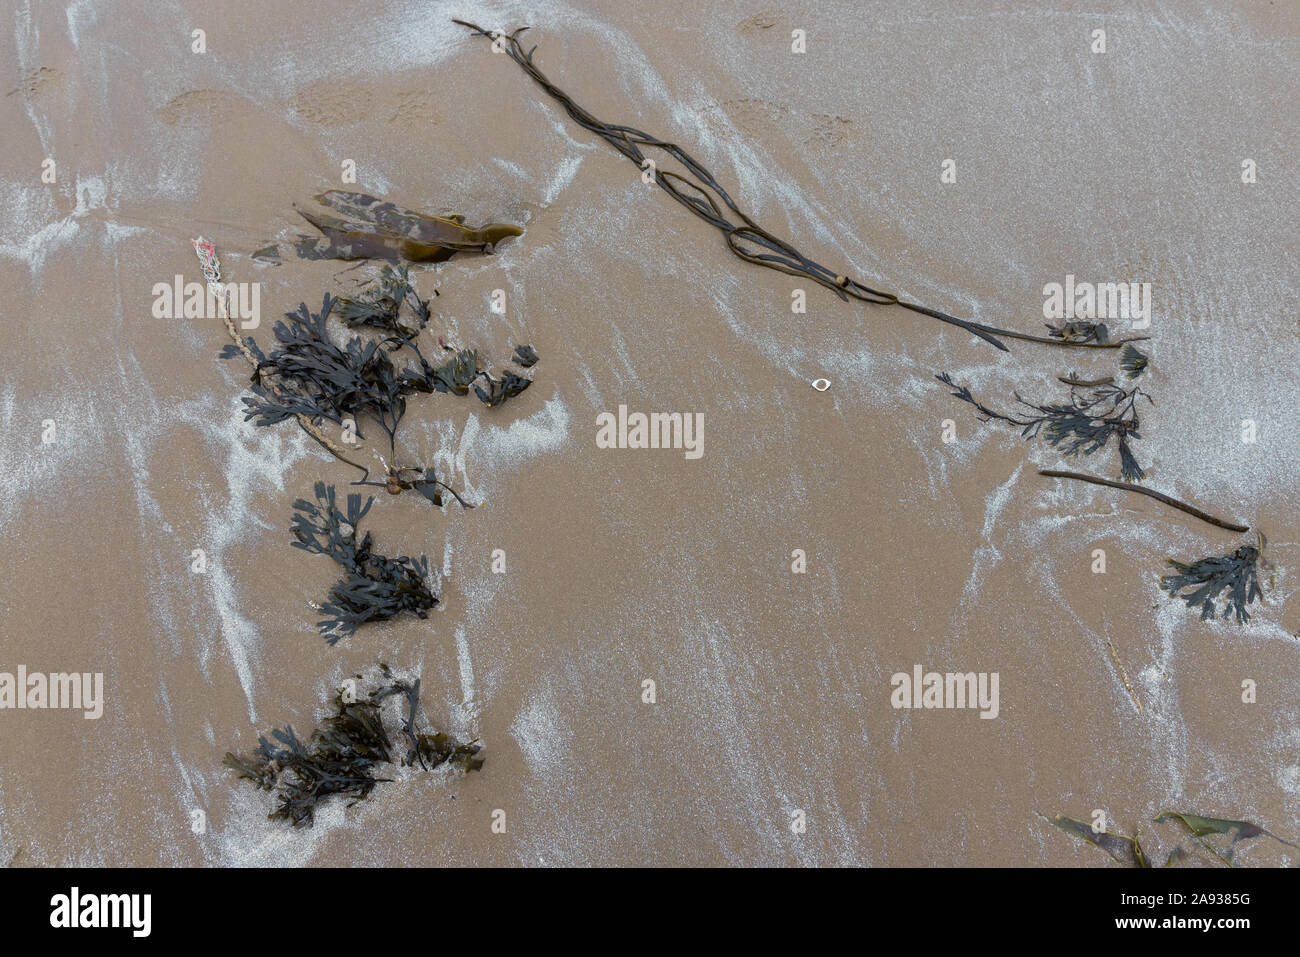 Sea flotsam as found on St Andrews beach, Scotland Stock Photo